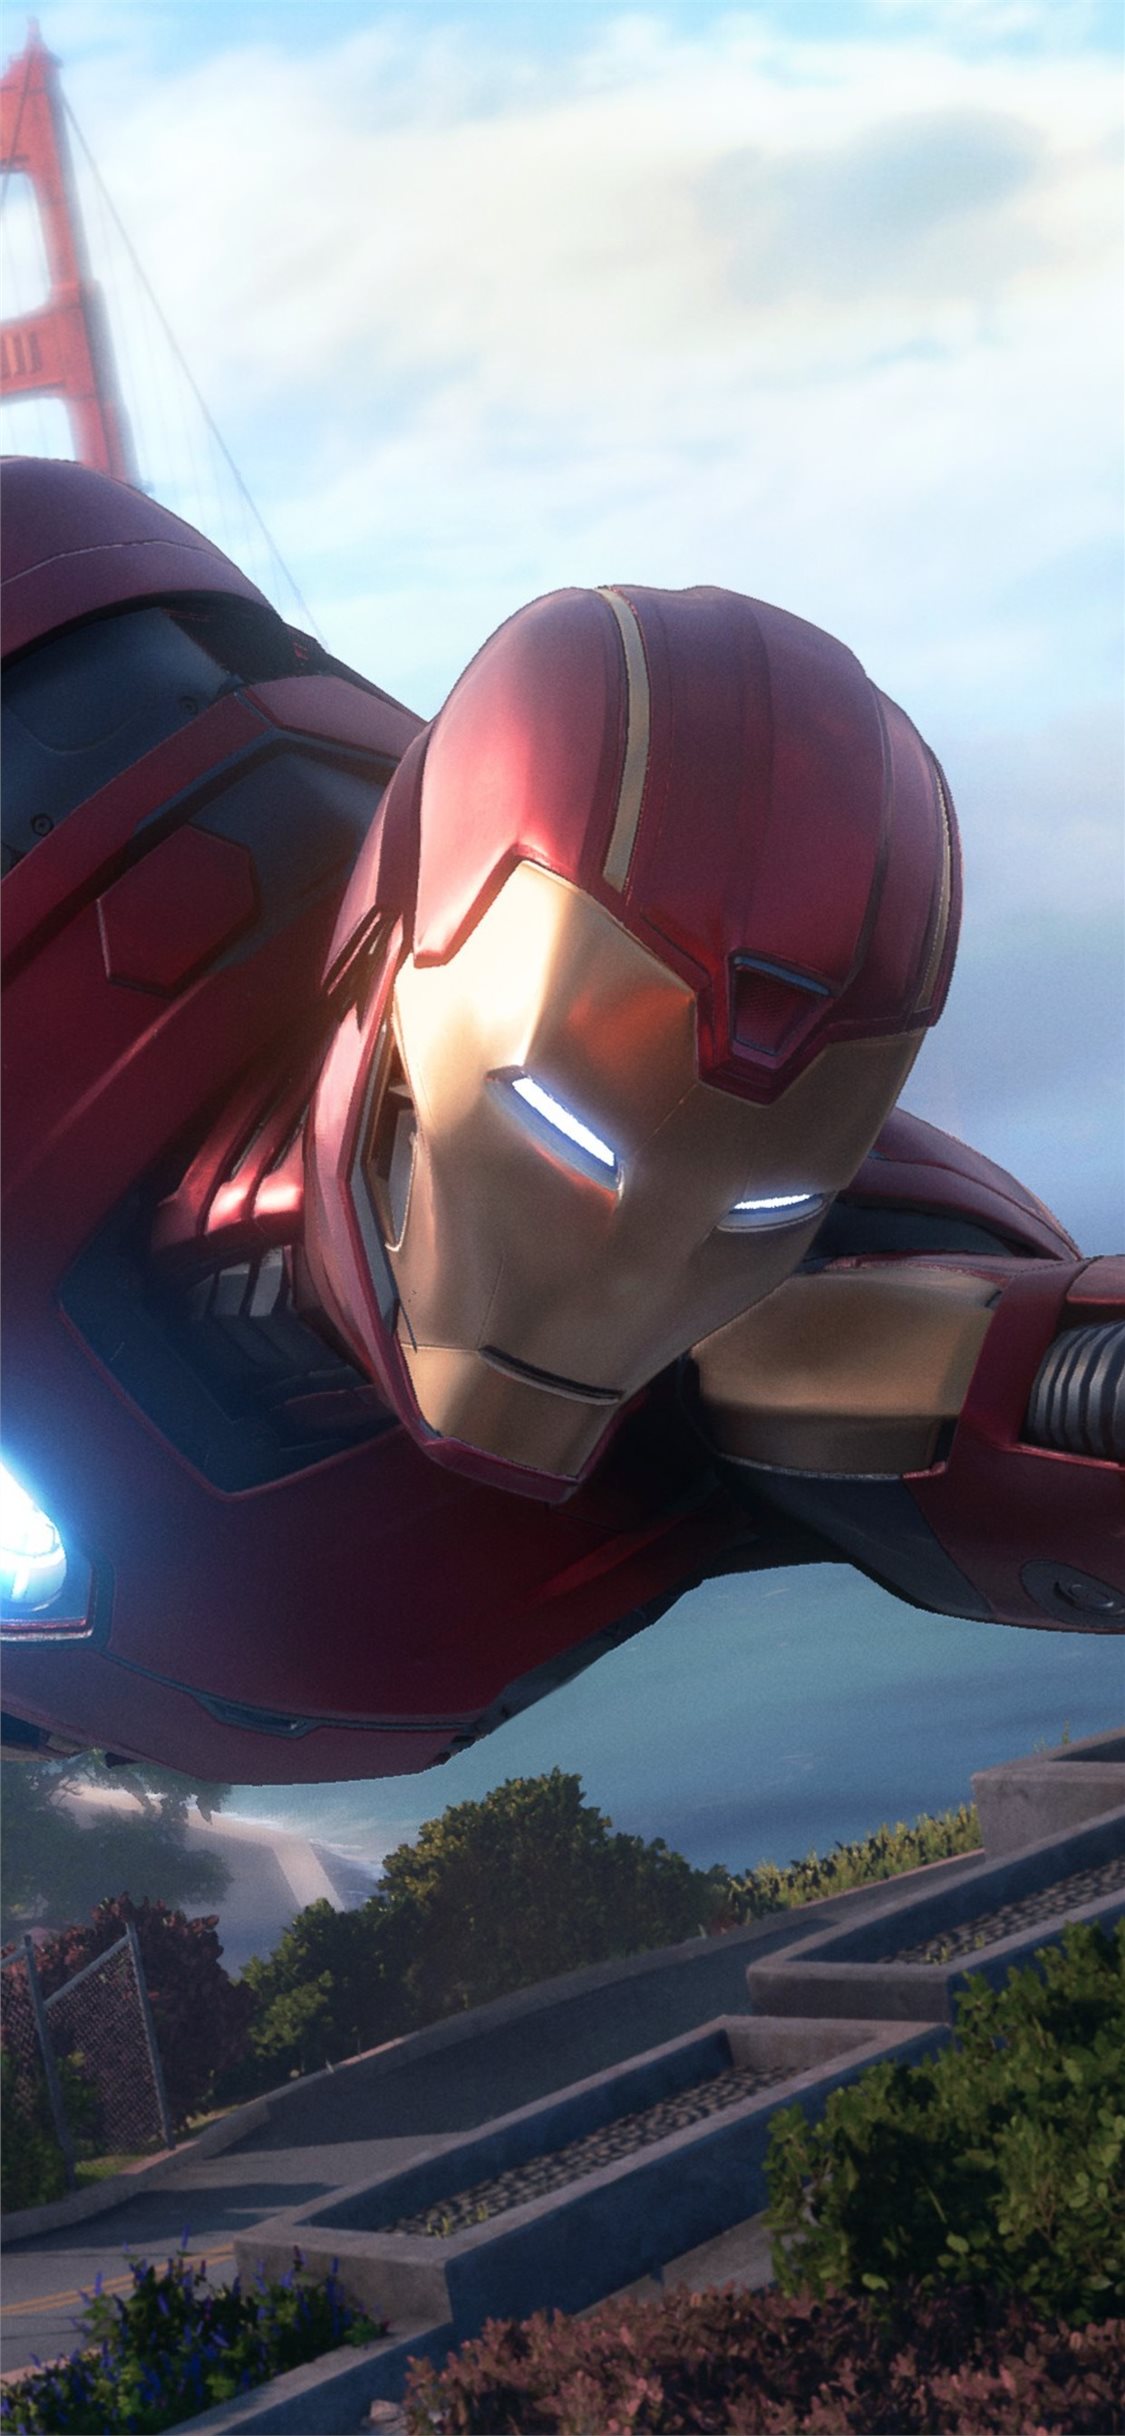 Marvel Avengers Iron Man iPhone X Wallpaper